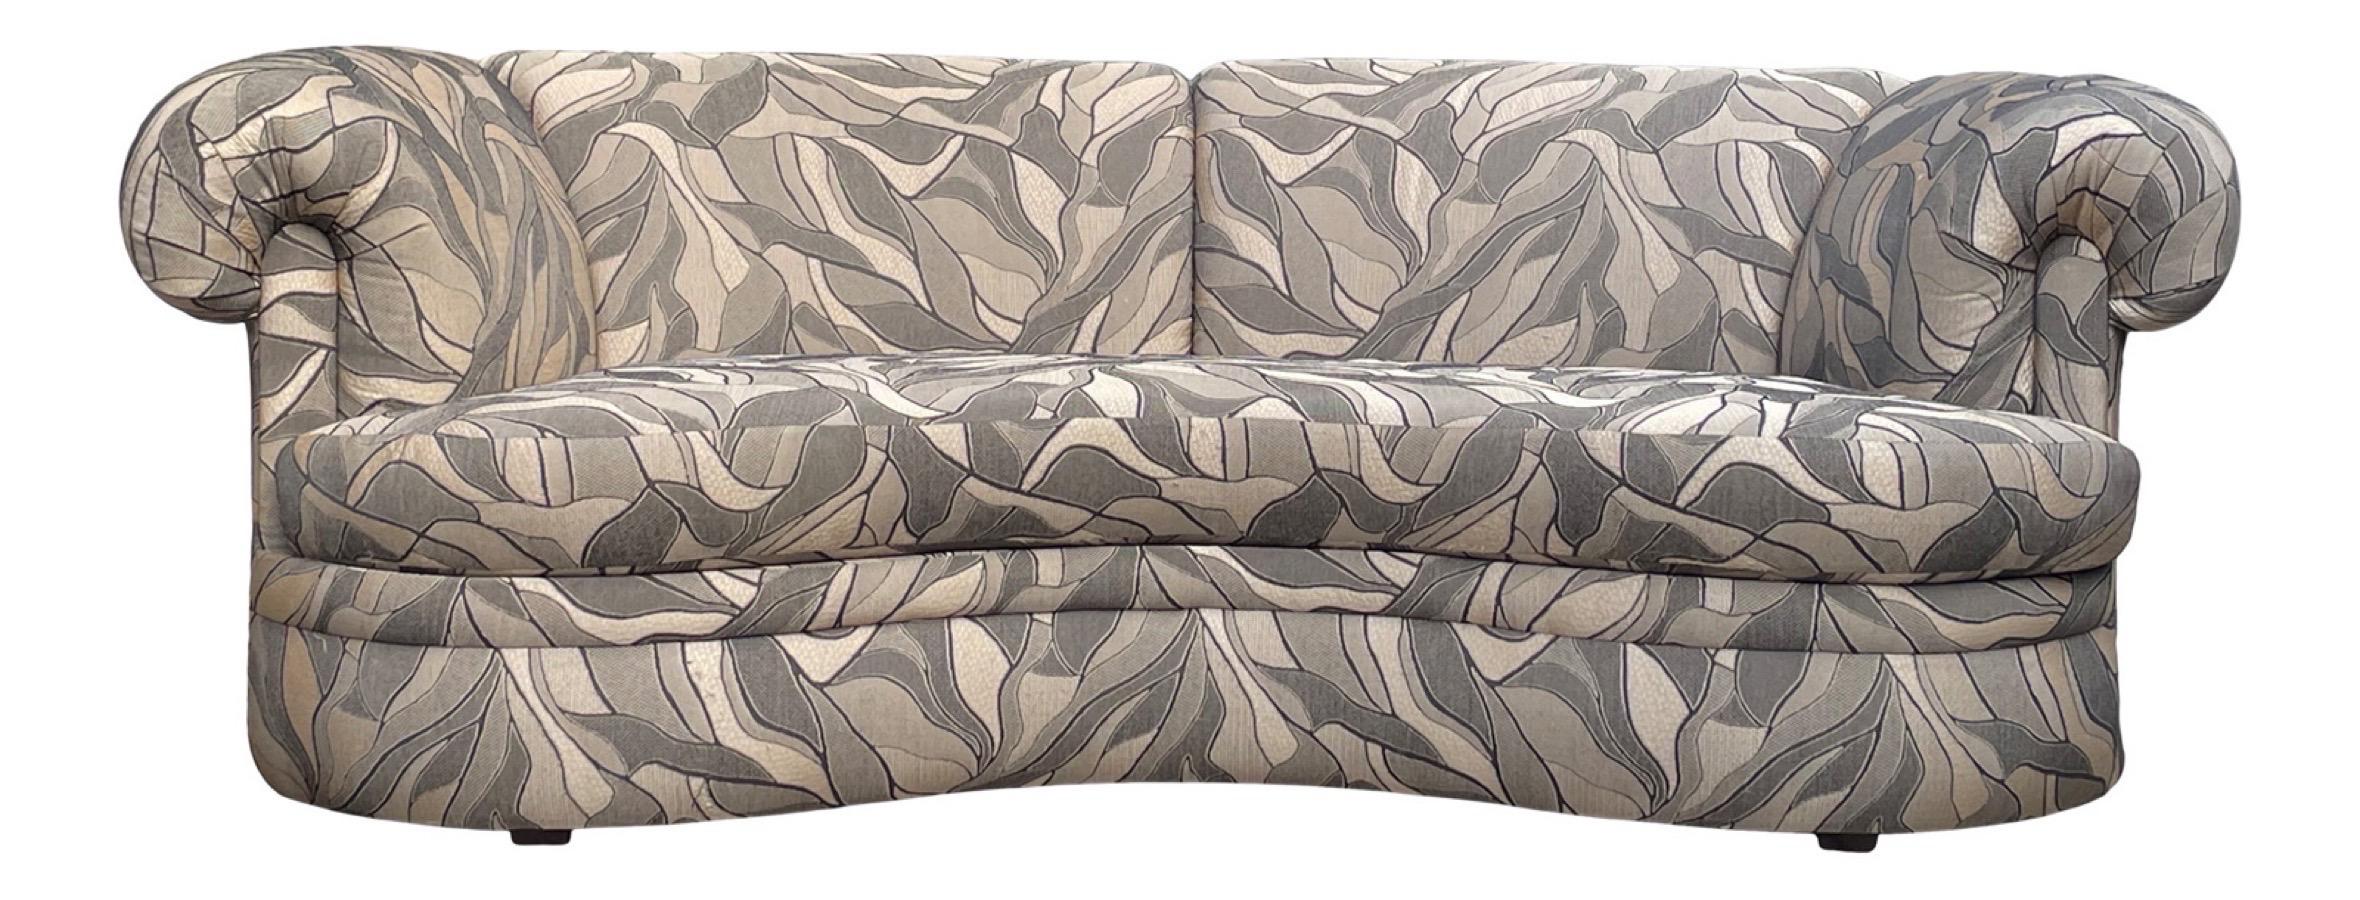 Upholstery 1990s Postmodern Kidney Cloud Sofa Settee, a Pair For Sale